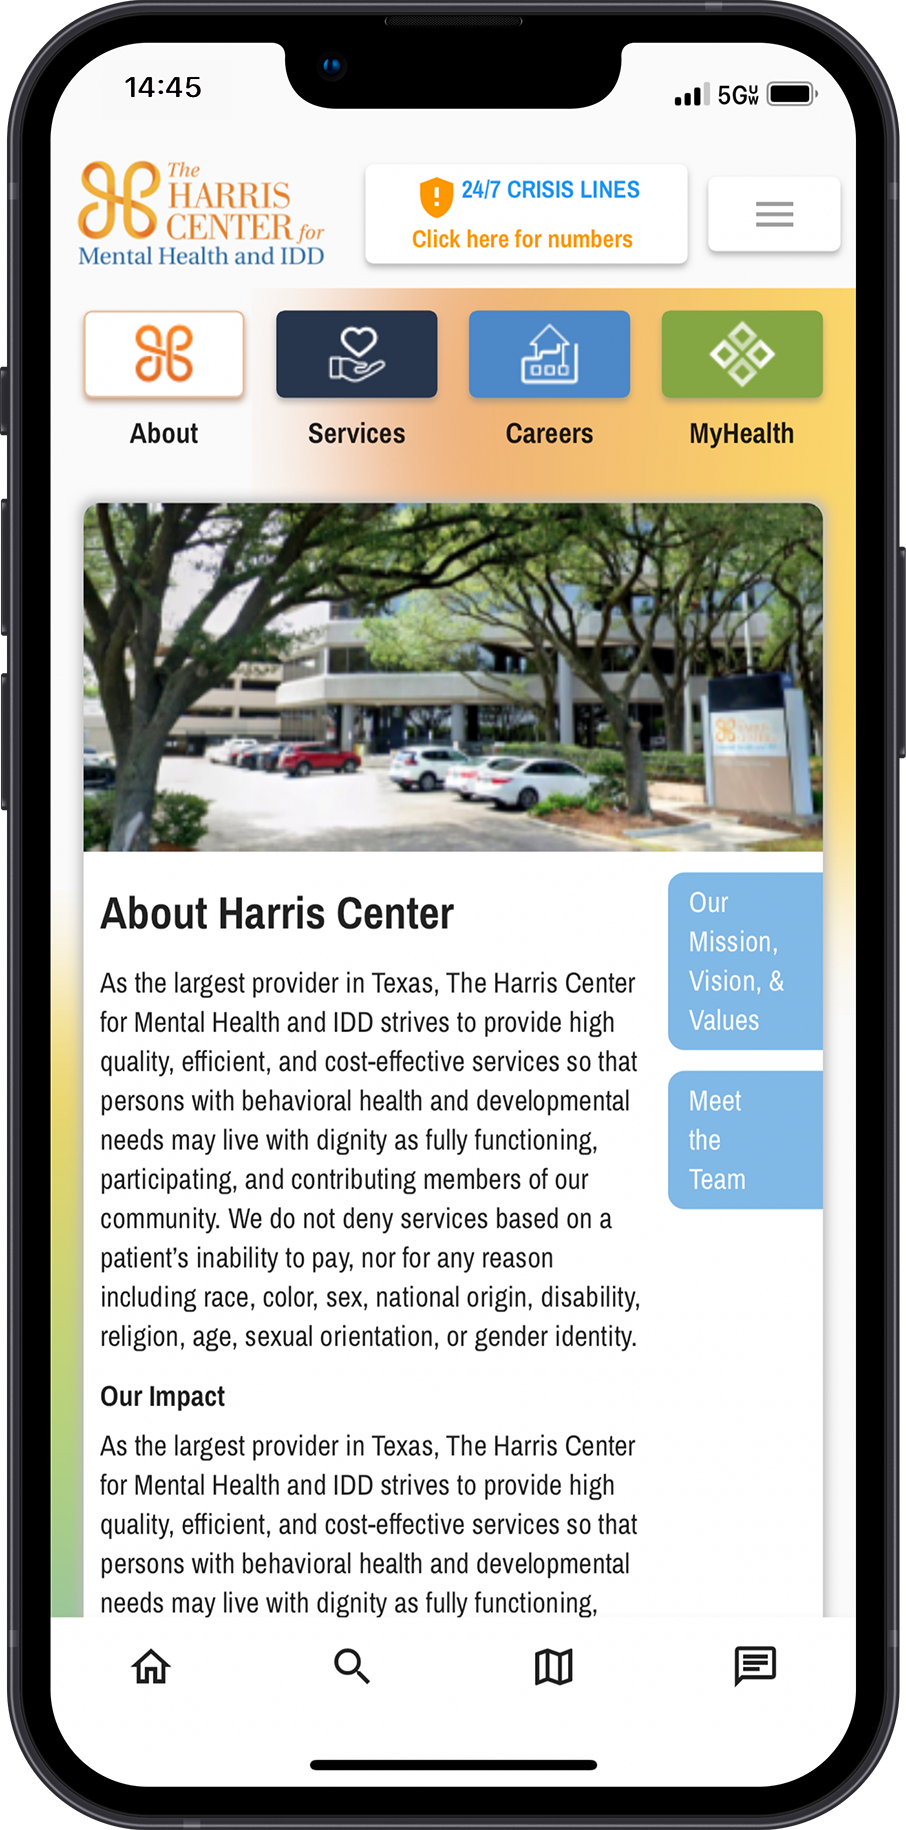 Harris Center App: About Us Screen